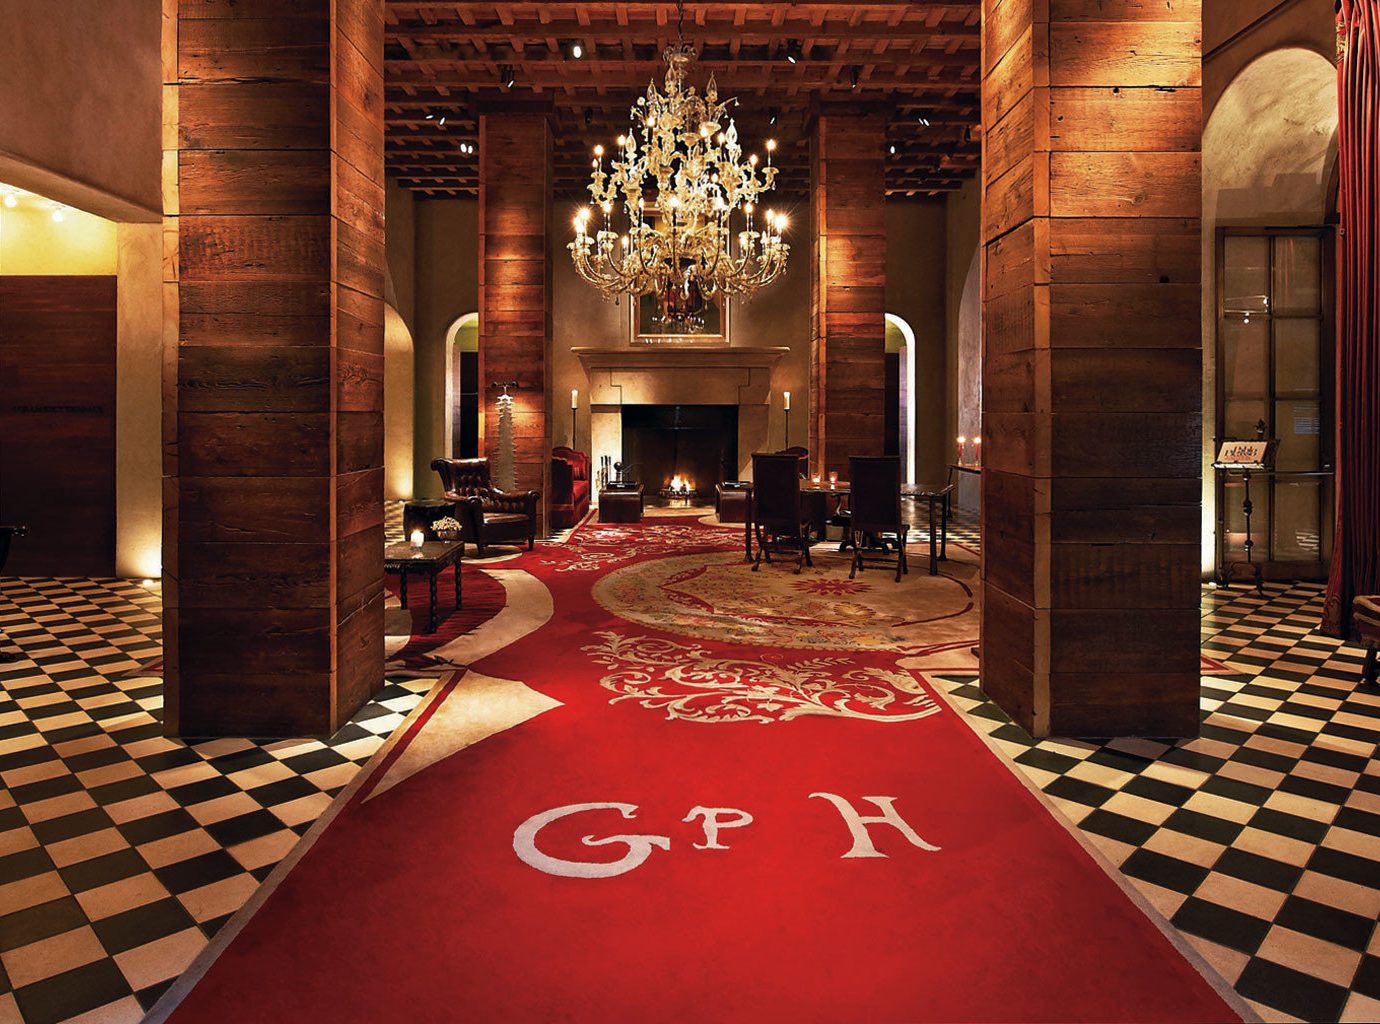 Hotels floor indoor Lobby room aisle red flooring function hall interior design estate ballroom furniture